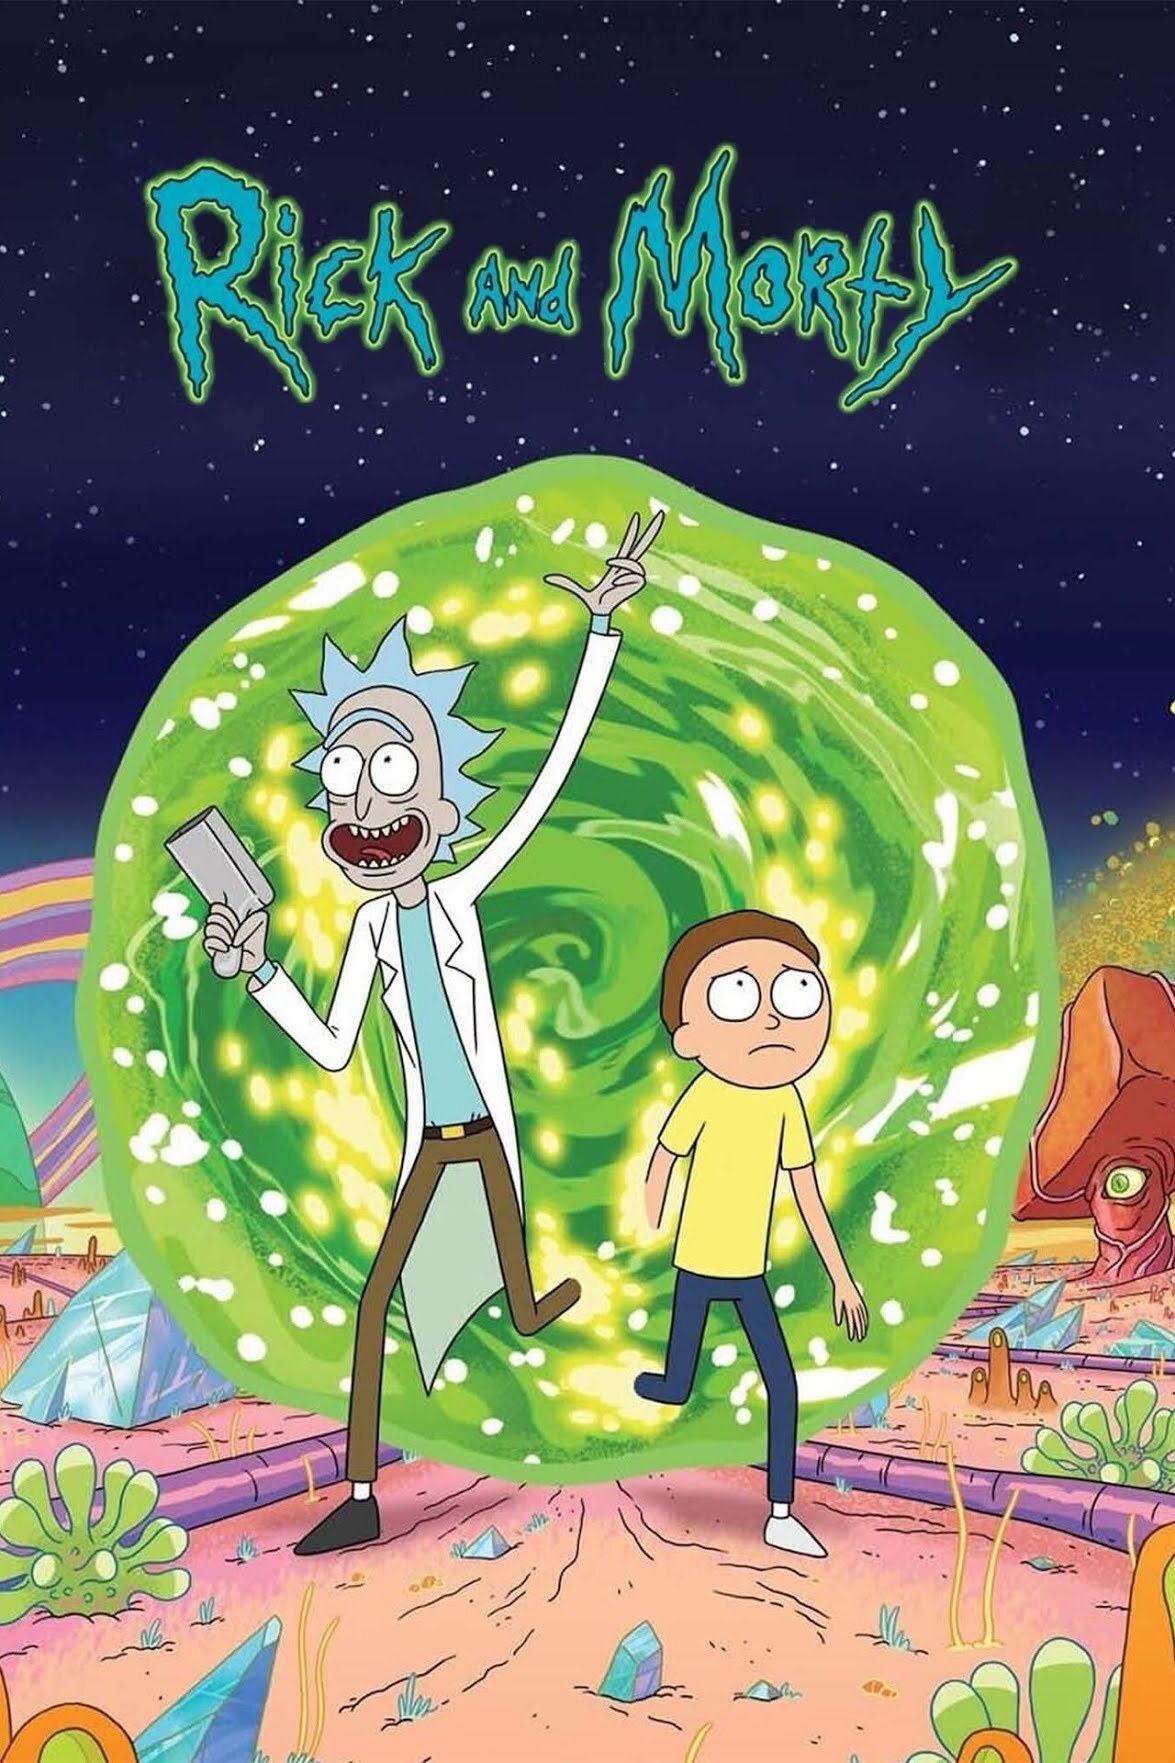 Rick and Morty (2013), on HBOmax